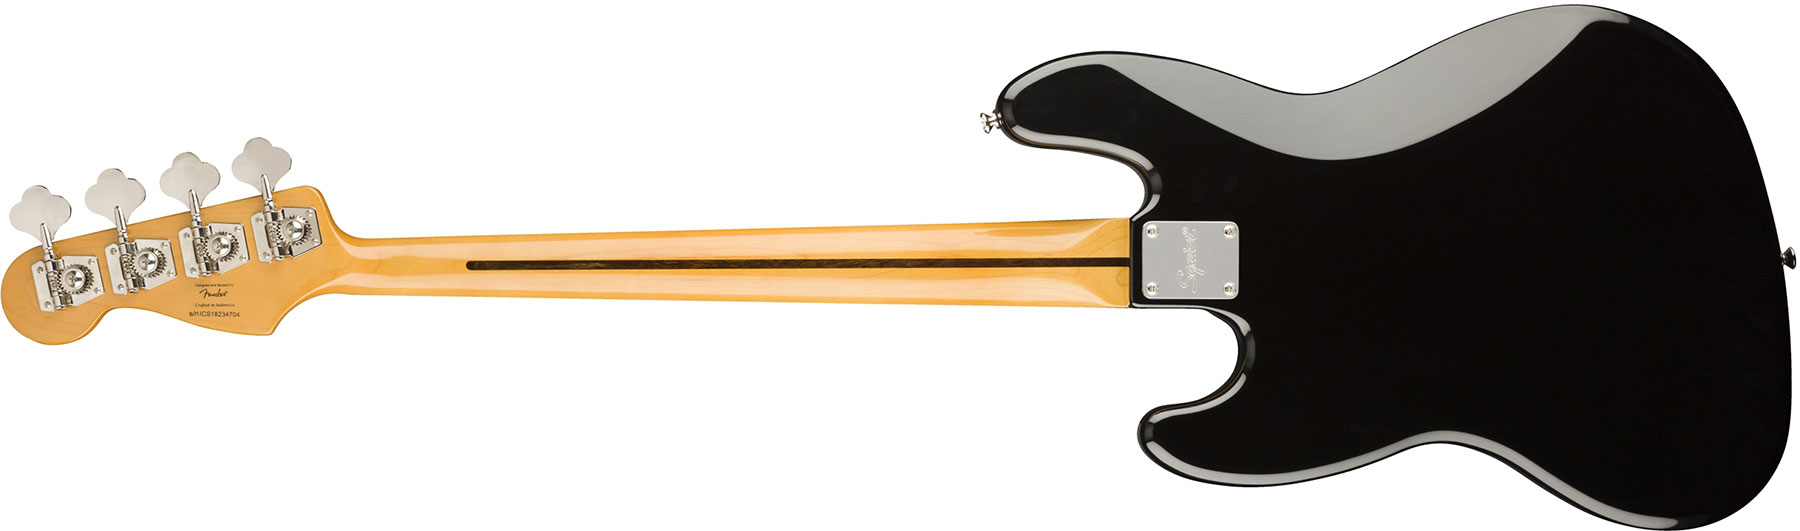 Squier Jazz Bass Classic Vibe 60s Fretless 2019 Lau - 3-color Sunburst - Solid body elektrische bas - Variation 1